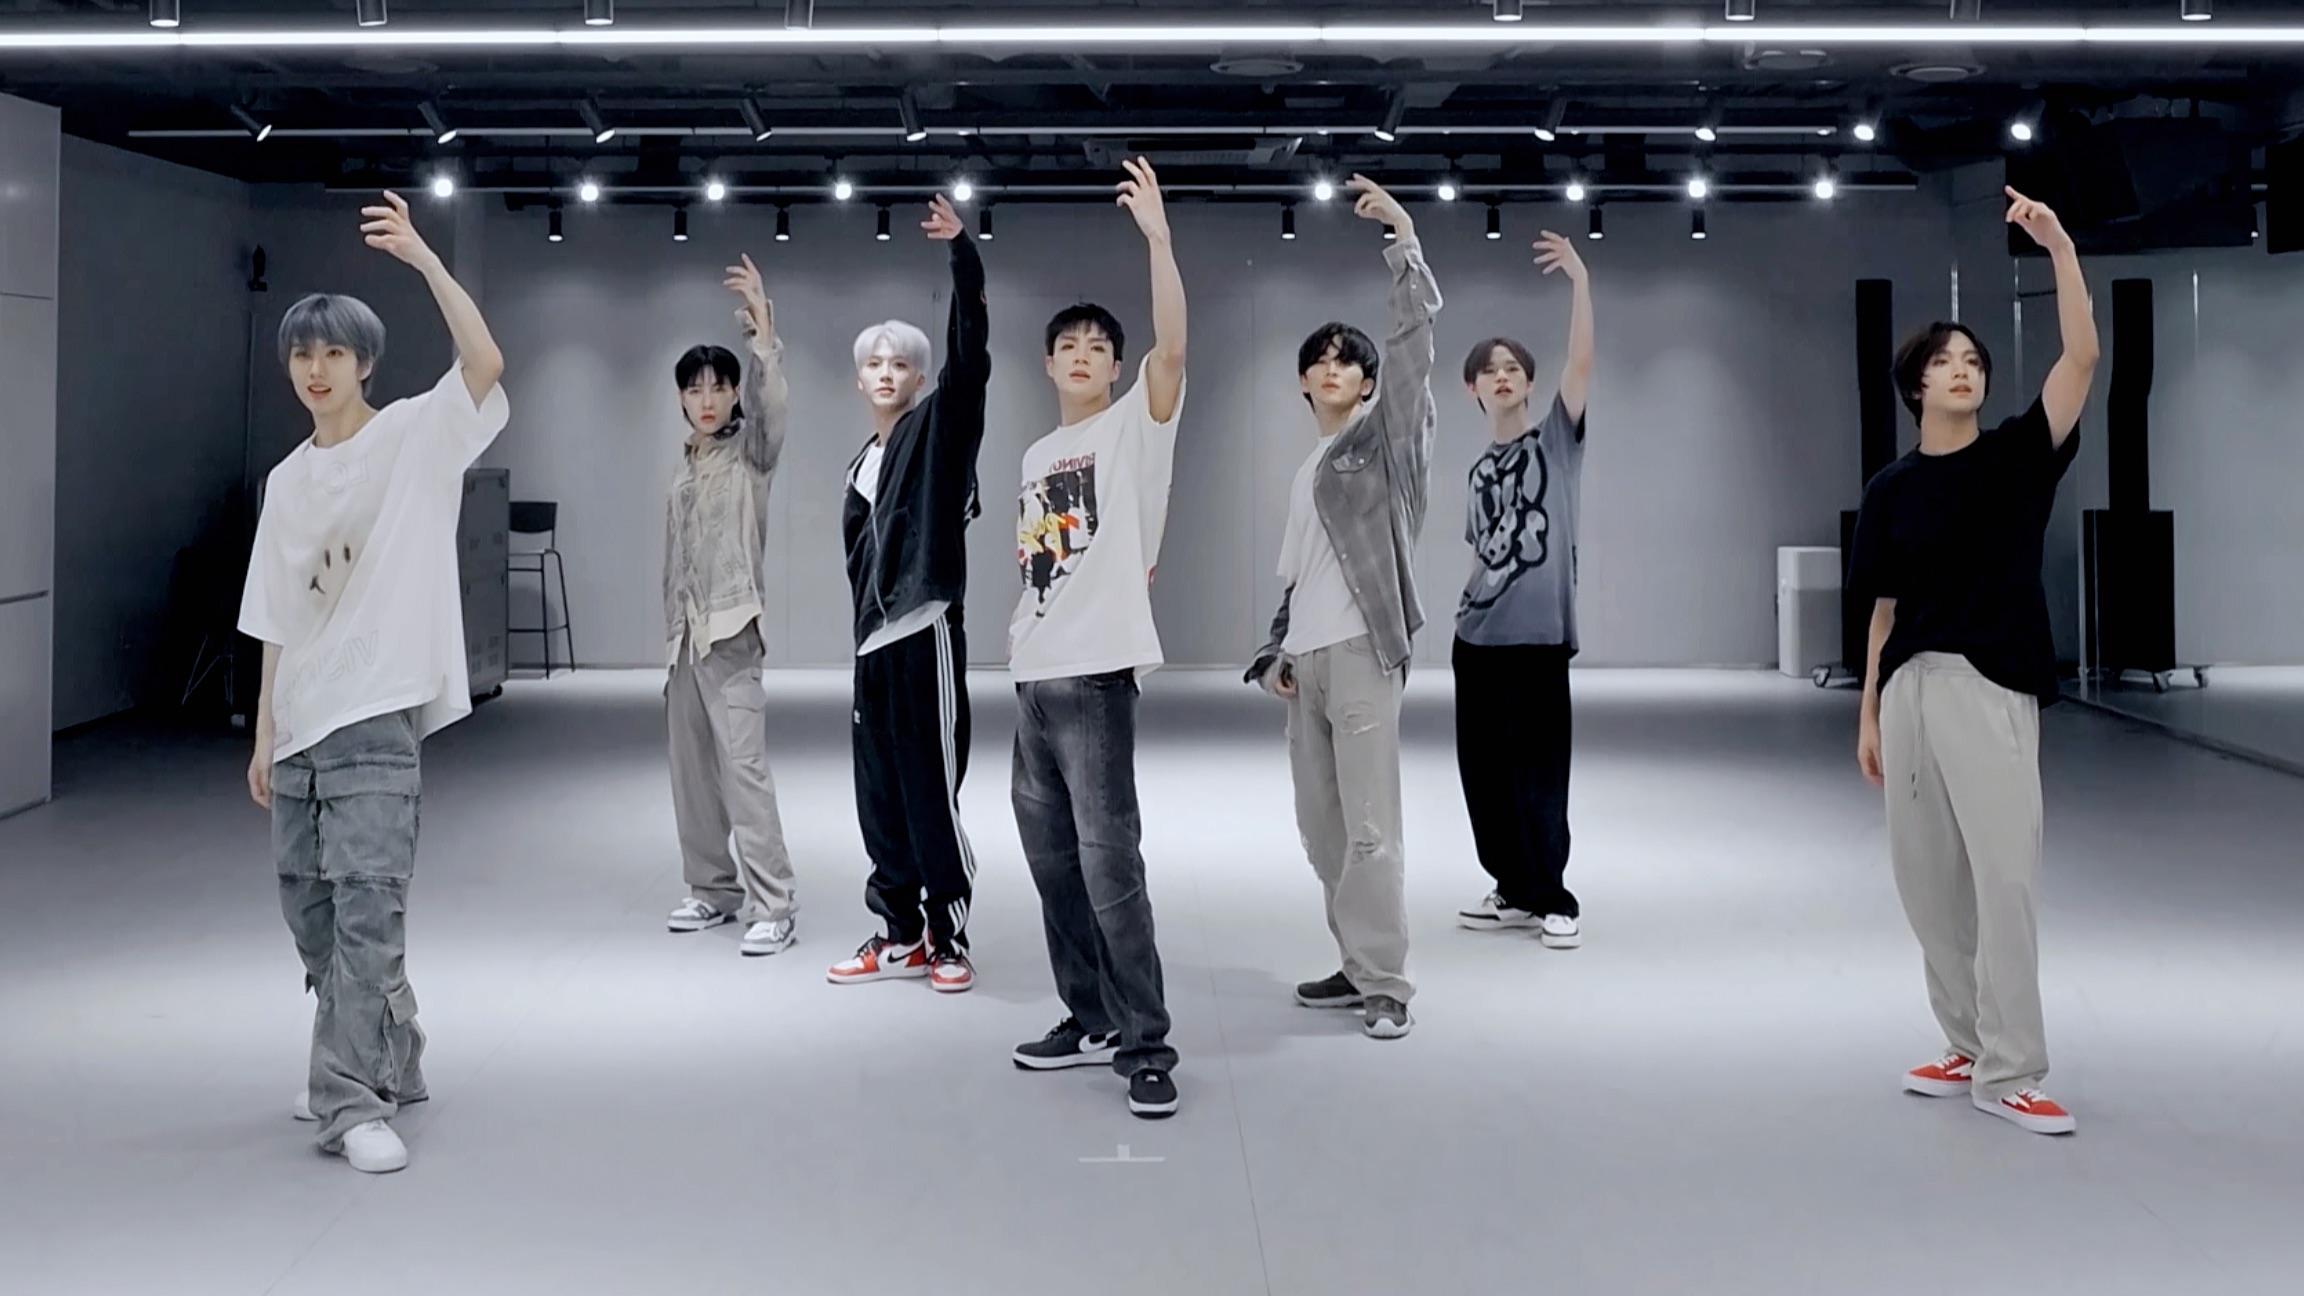 【4K镜面】NCT DREAM - Smoothie 练习室 分段循环 直拍 画放大 替音轨♡扒舞专用